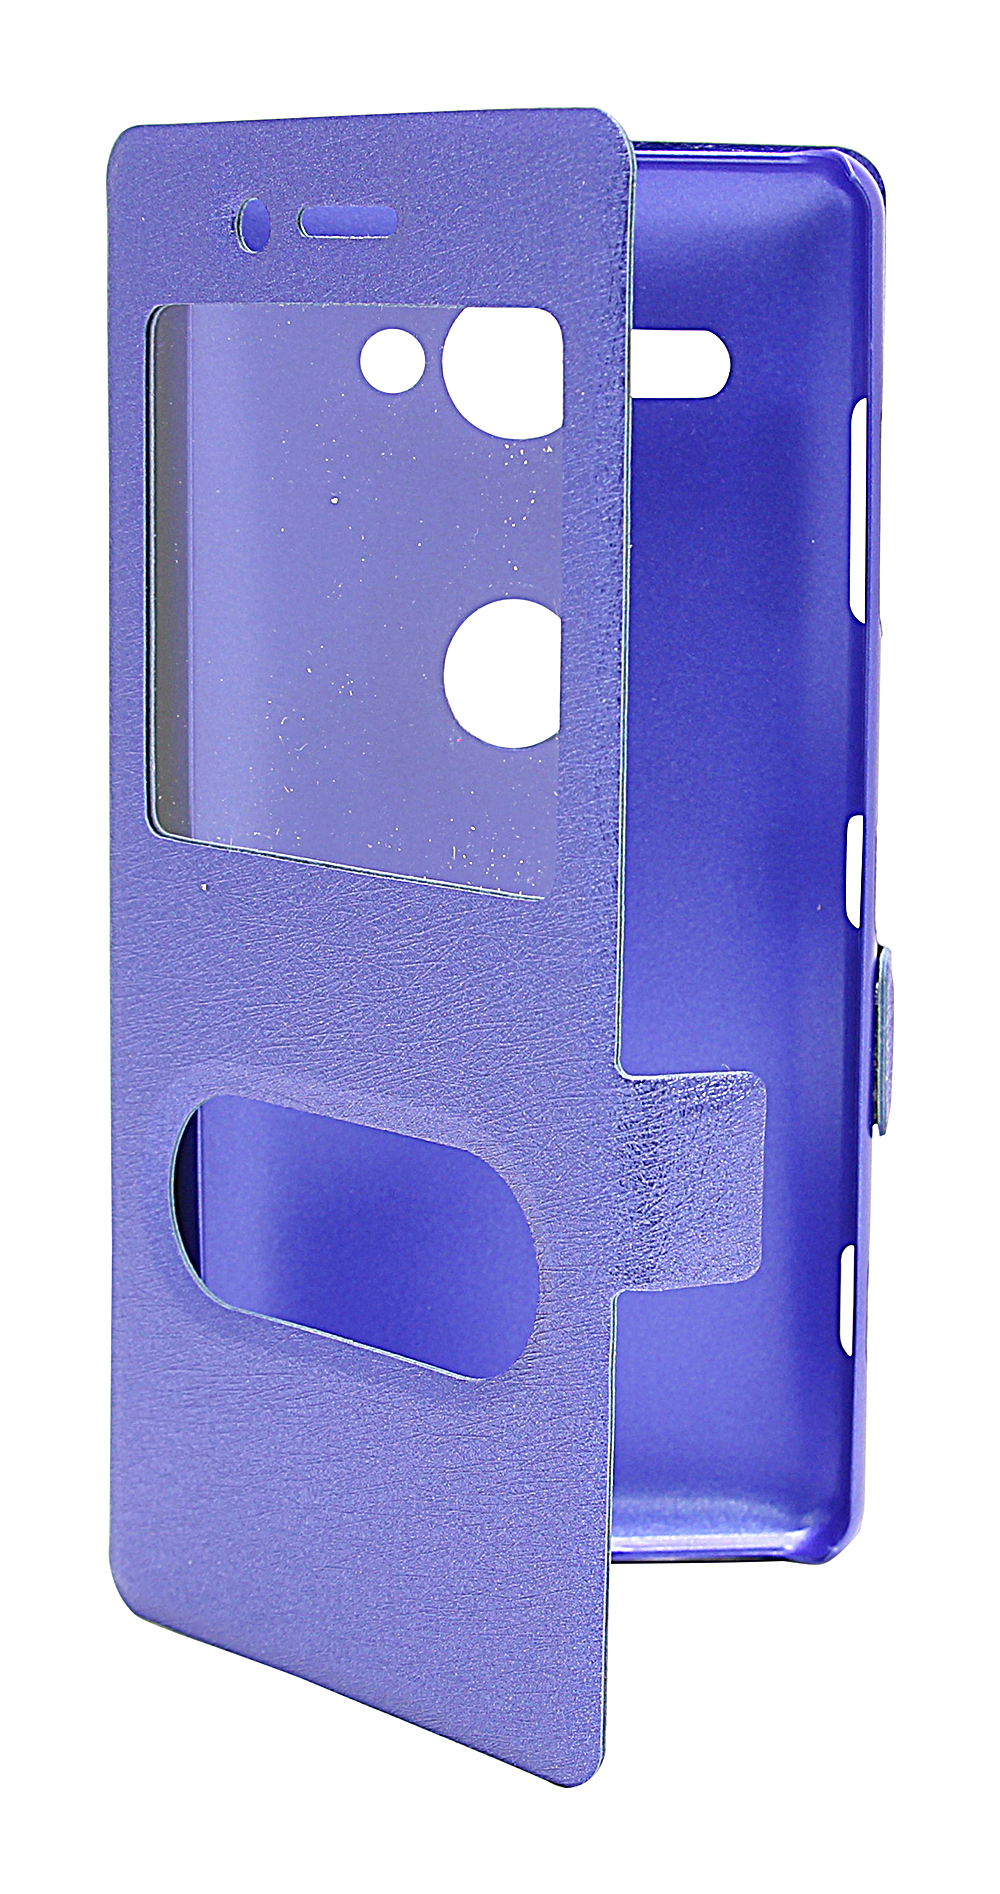 Flipcase Sony Xperia XZ2 Compact (H8324)